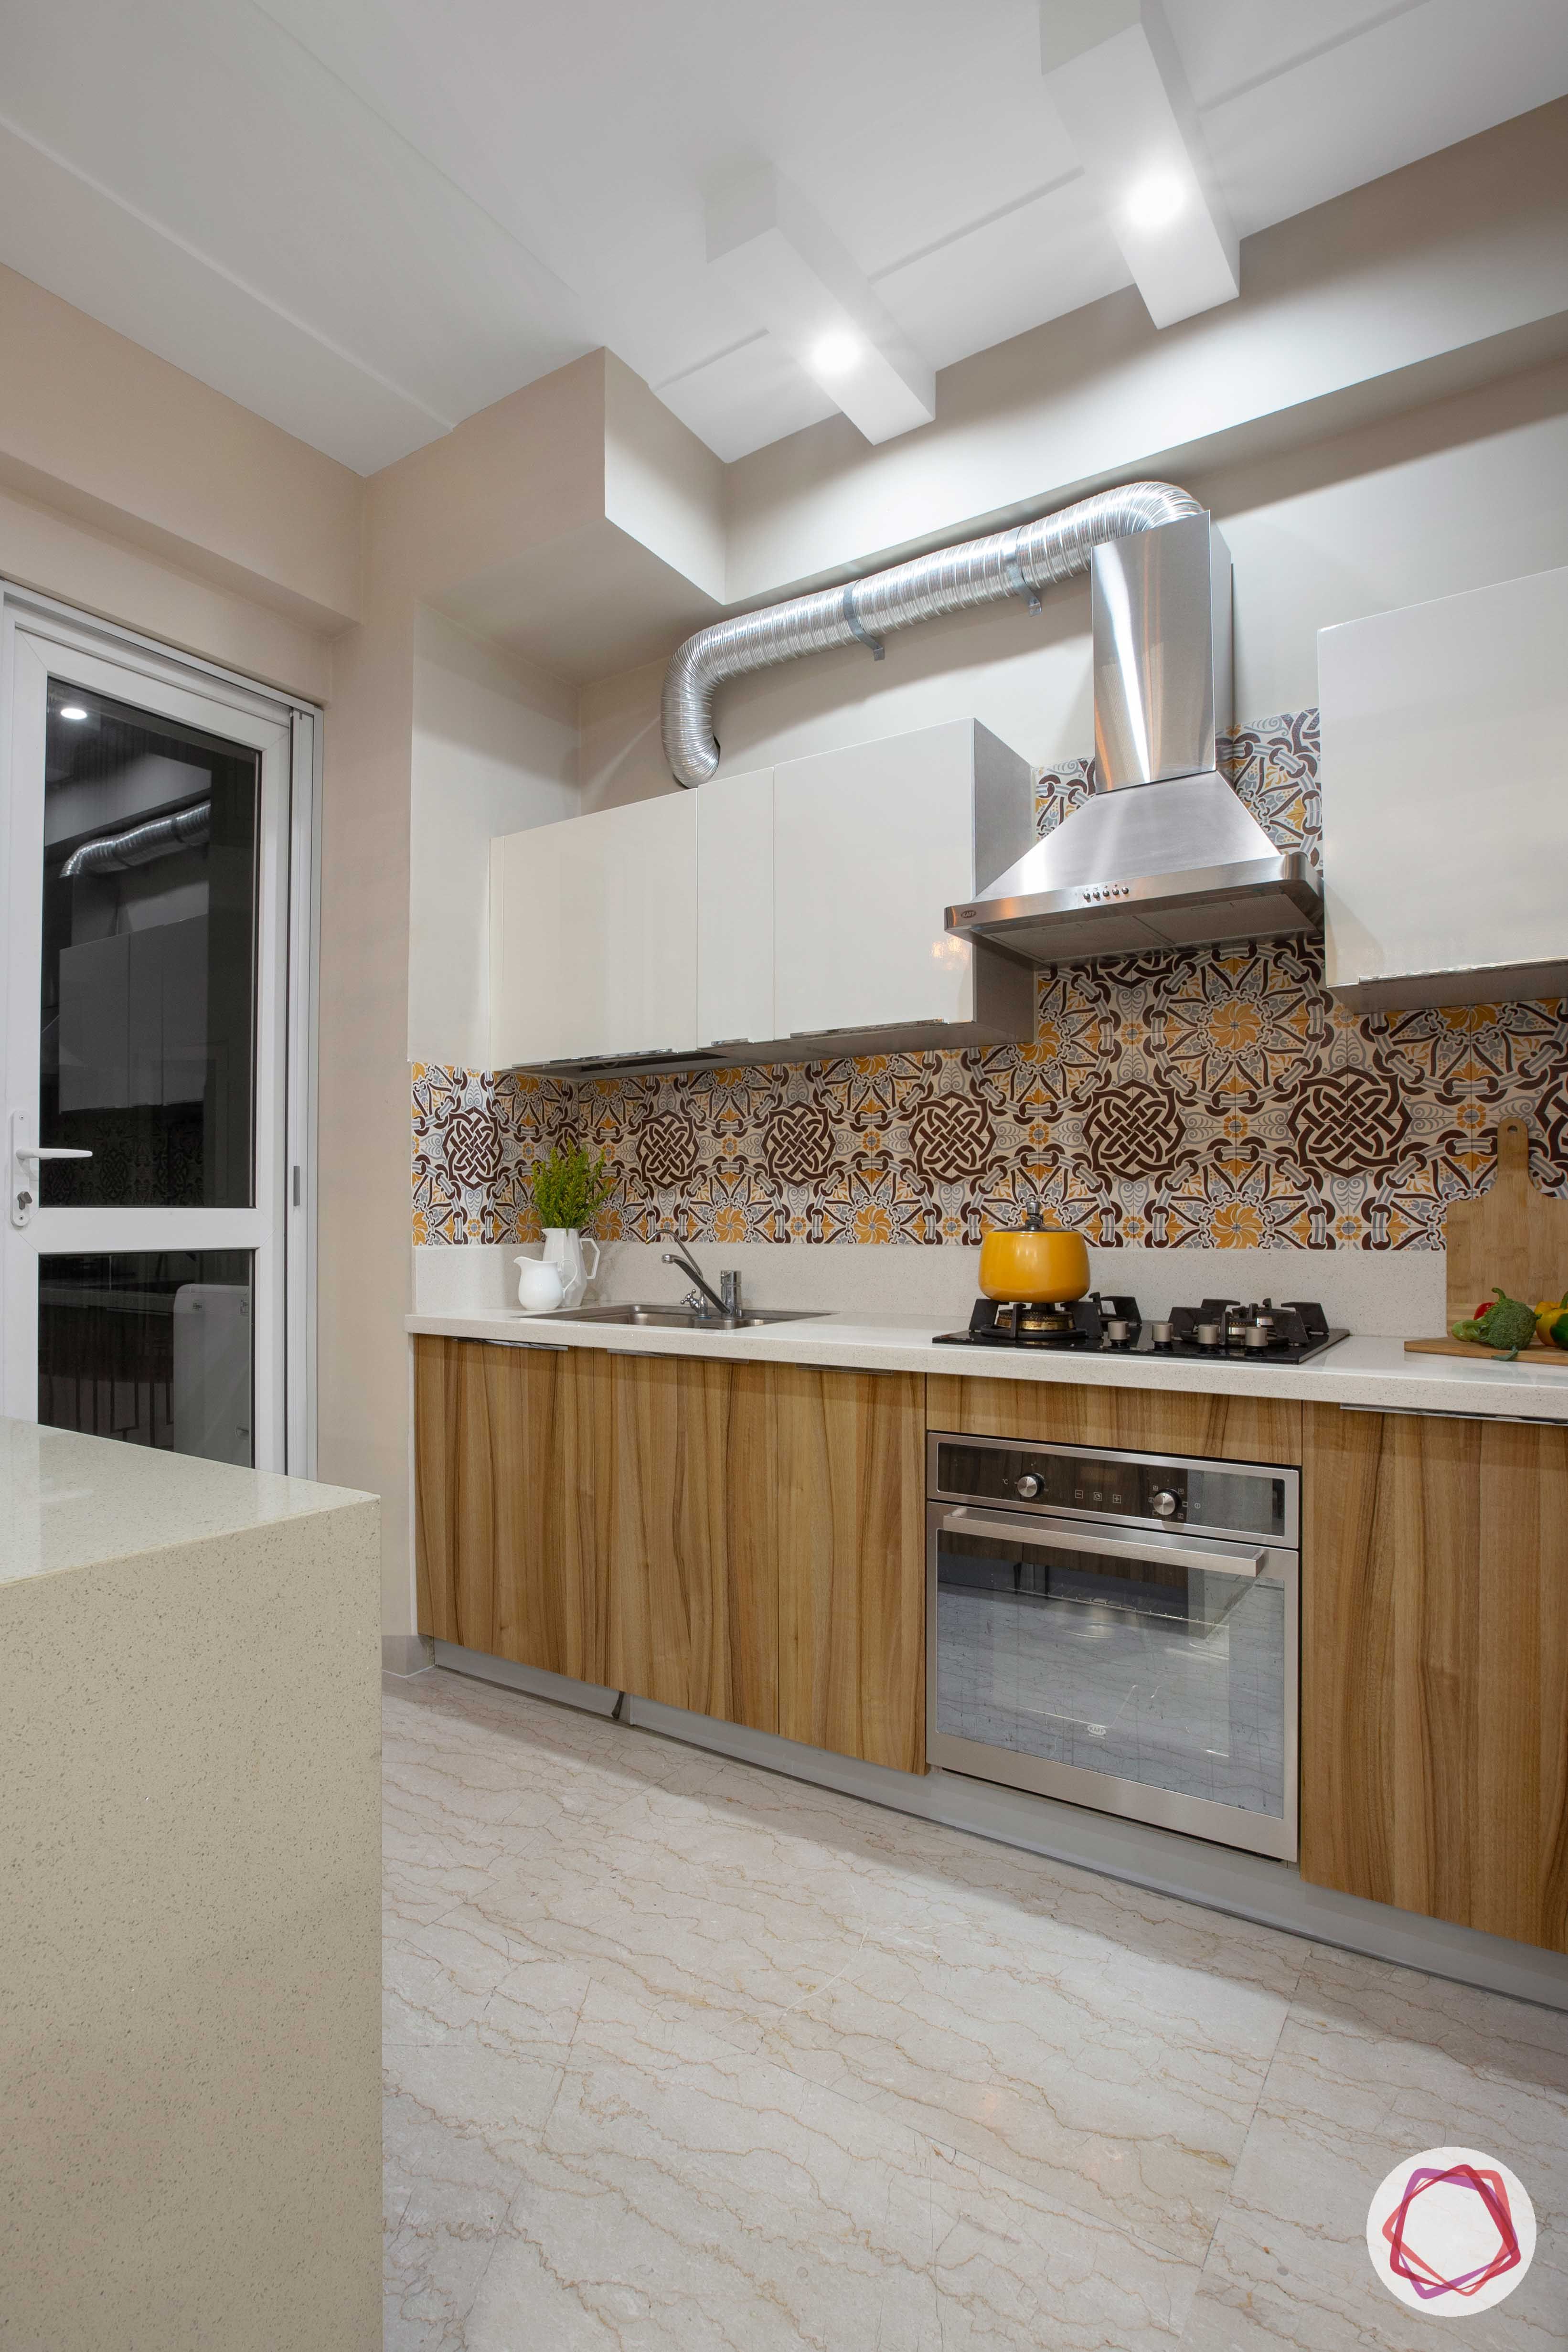 Prateek Stylome-wooden kitchen cabinets-chimney designs